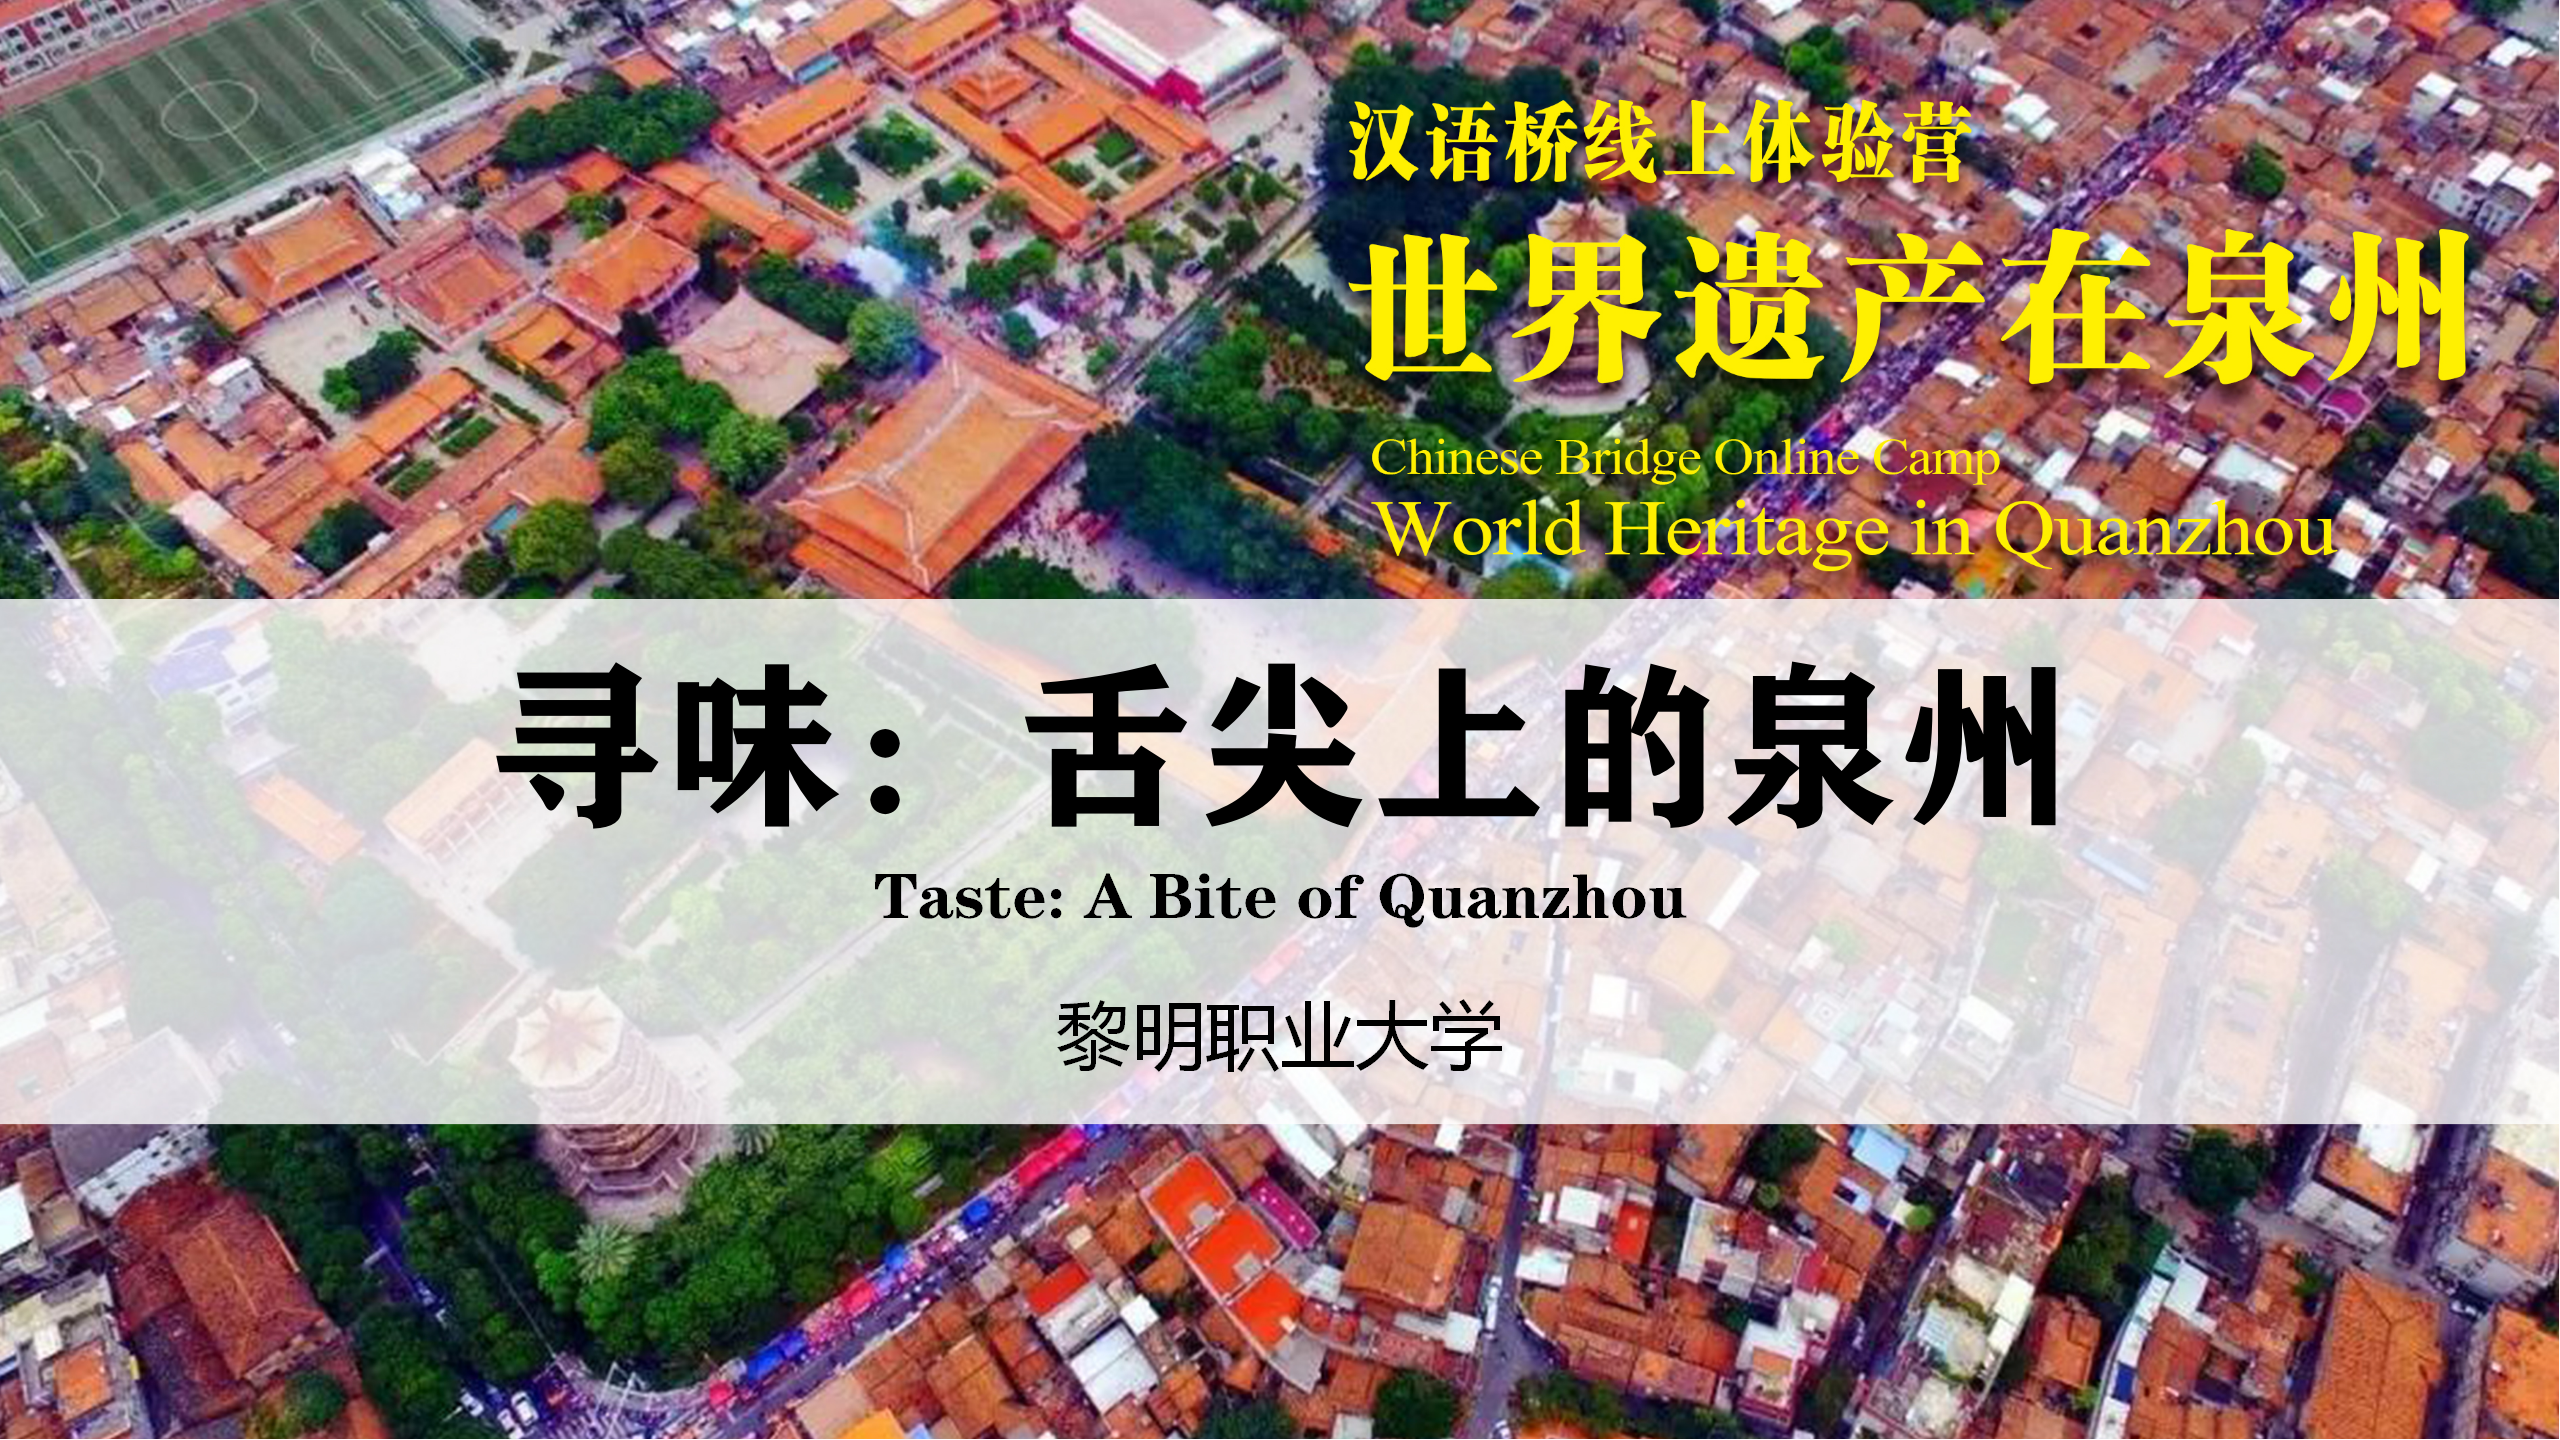 Taste: A Bite of Quanzhou